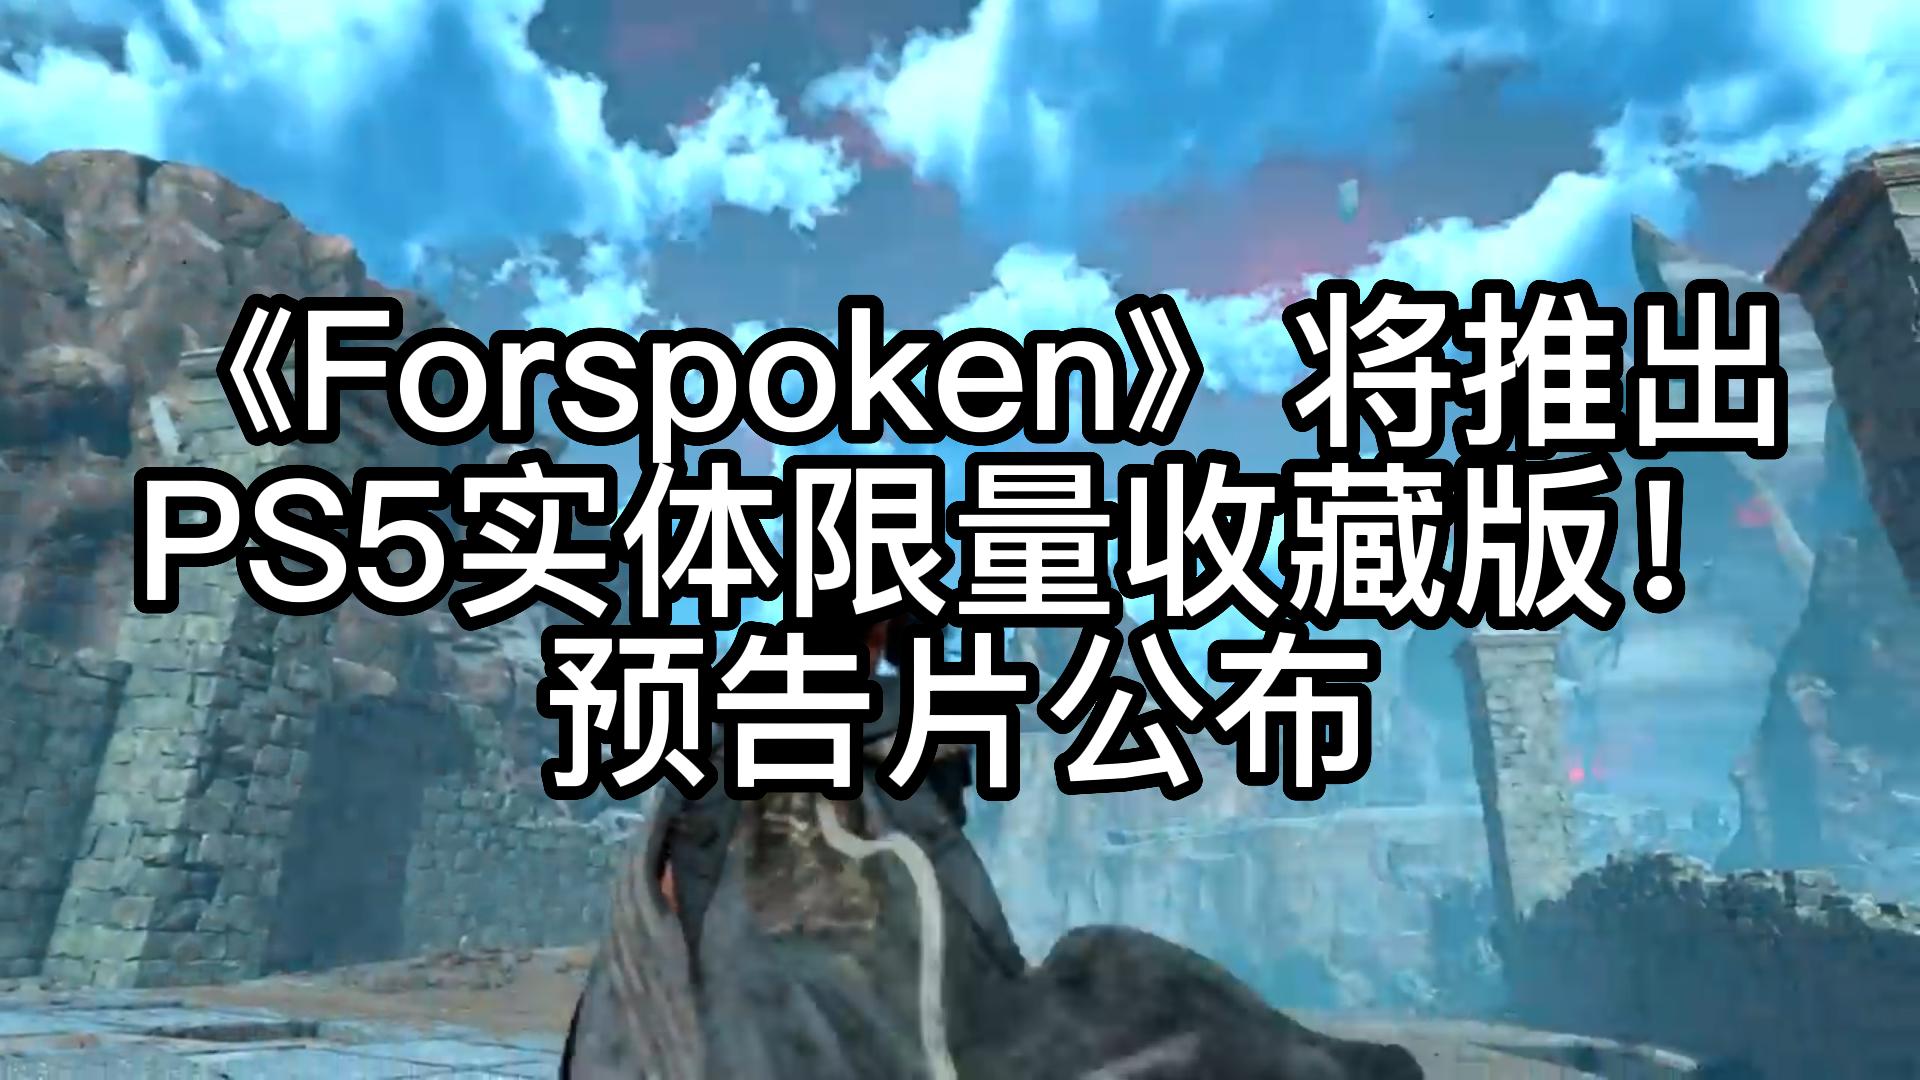 Forspoken》将推出PS5实体限量收藏版！预告片公布-哔哩哔哩